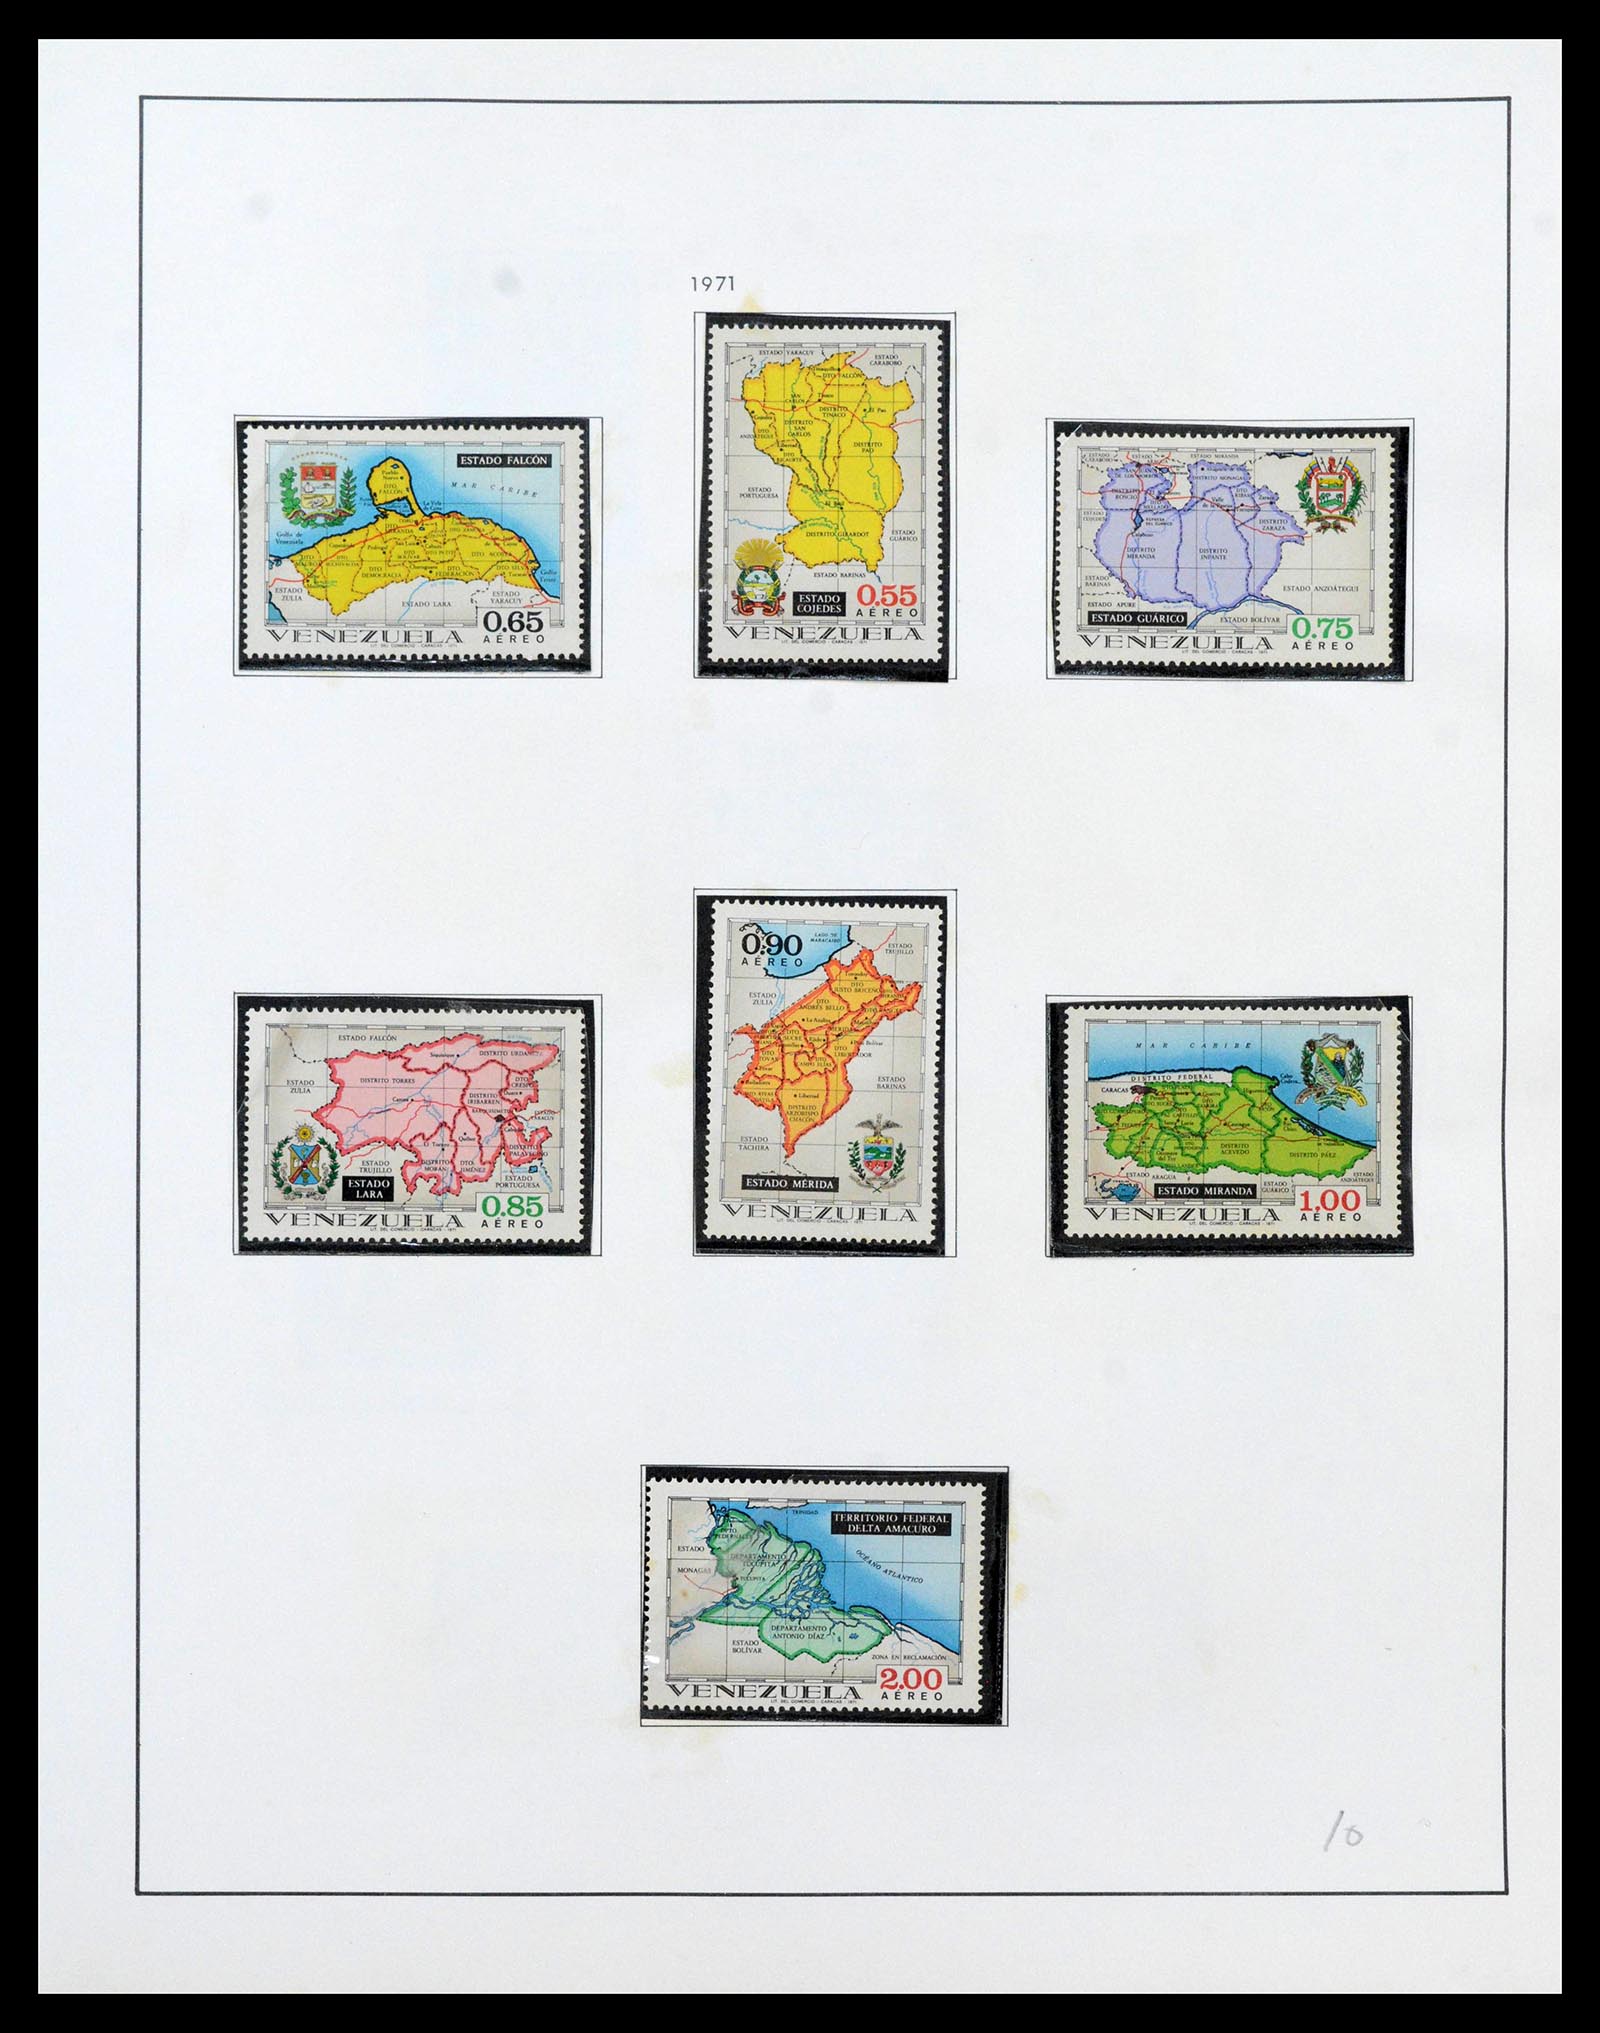 39436 0075 - Stamp collection 39436 Venezuela 1859-1985.